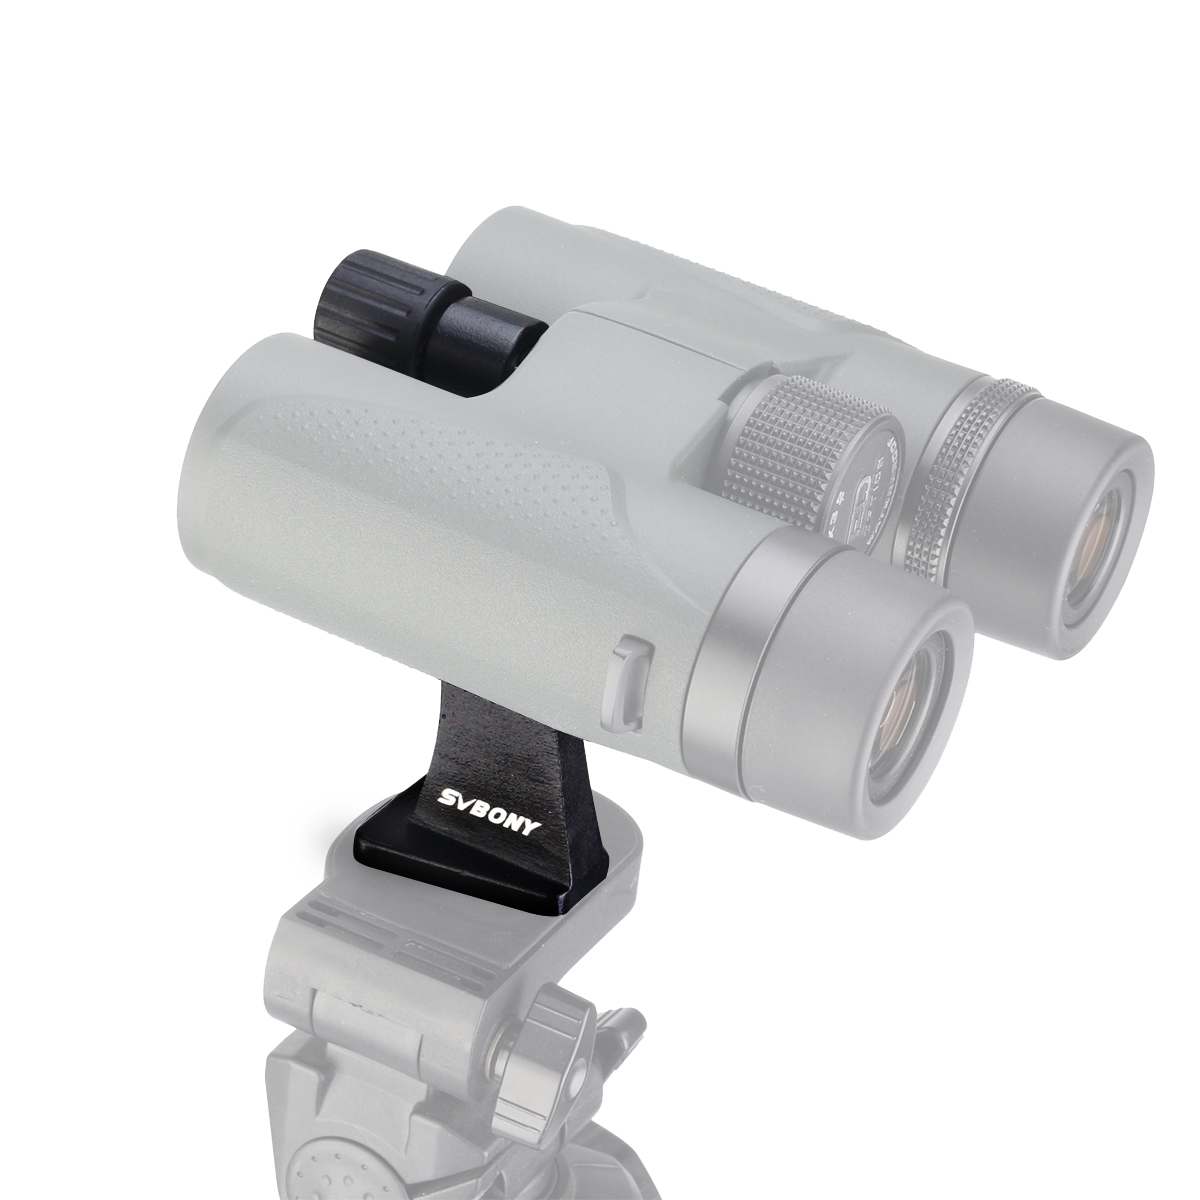 SVBONY-SV110-Fully-Metal-Binoculars-Tripod-Mount-Adapter-14-Inch-Threading-Black-1817315-8